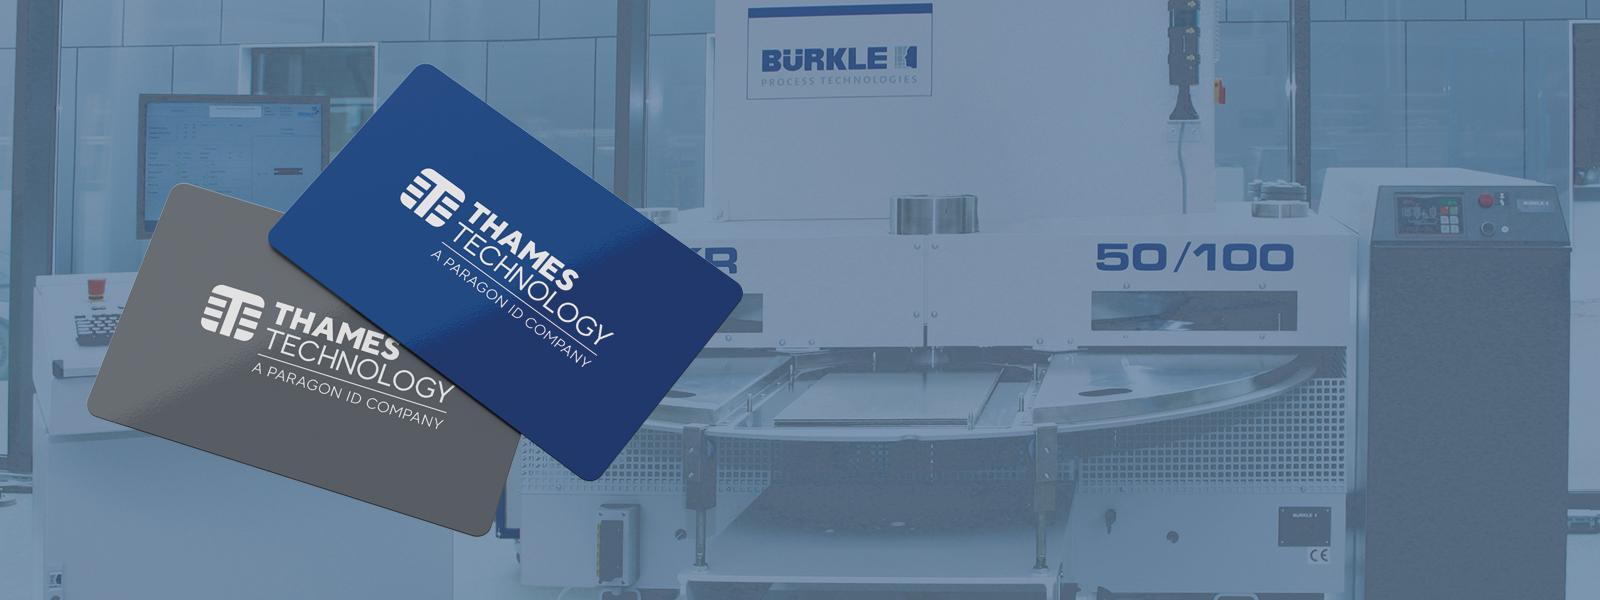 Buerkle laminator increasing production capacity at Thames Technology